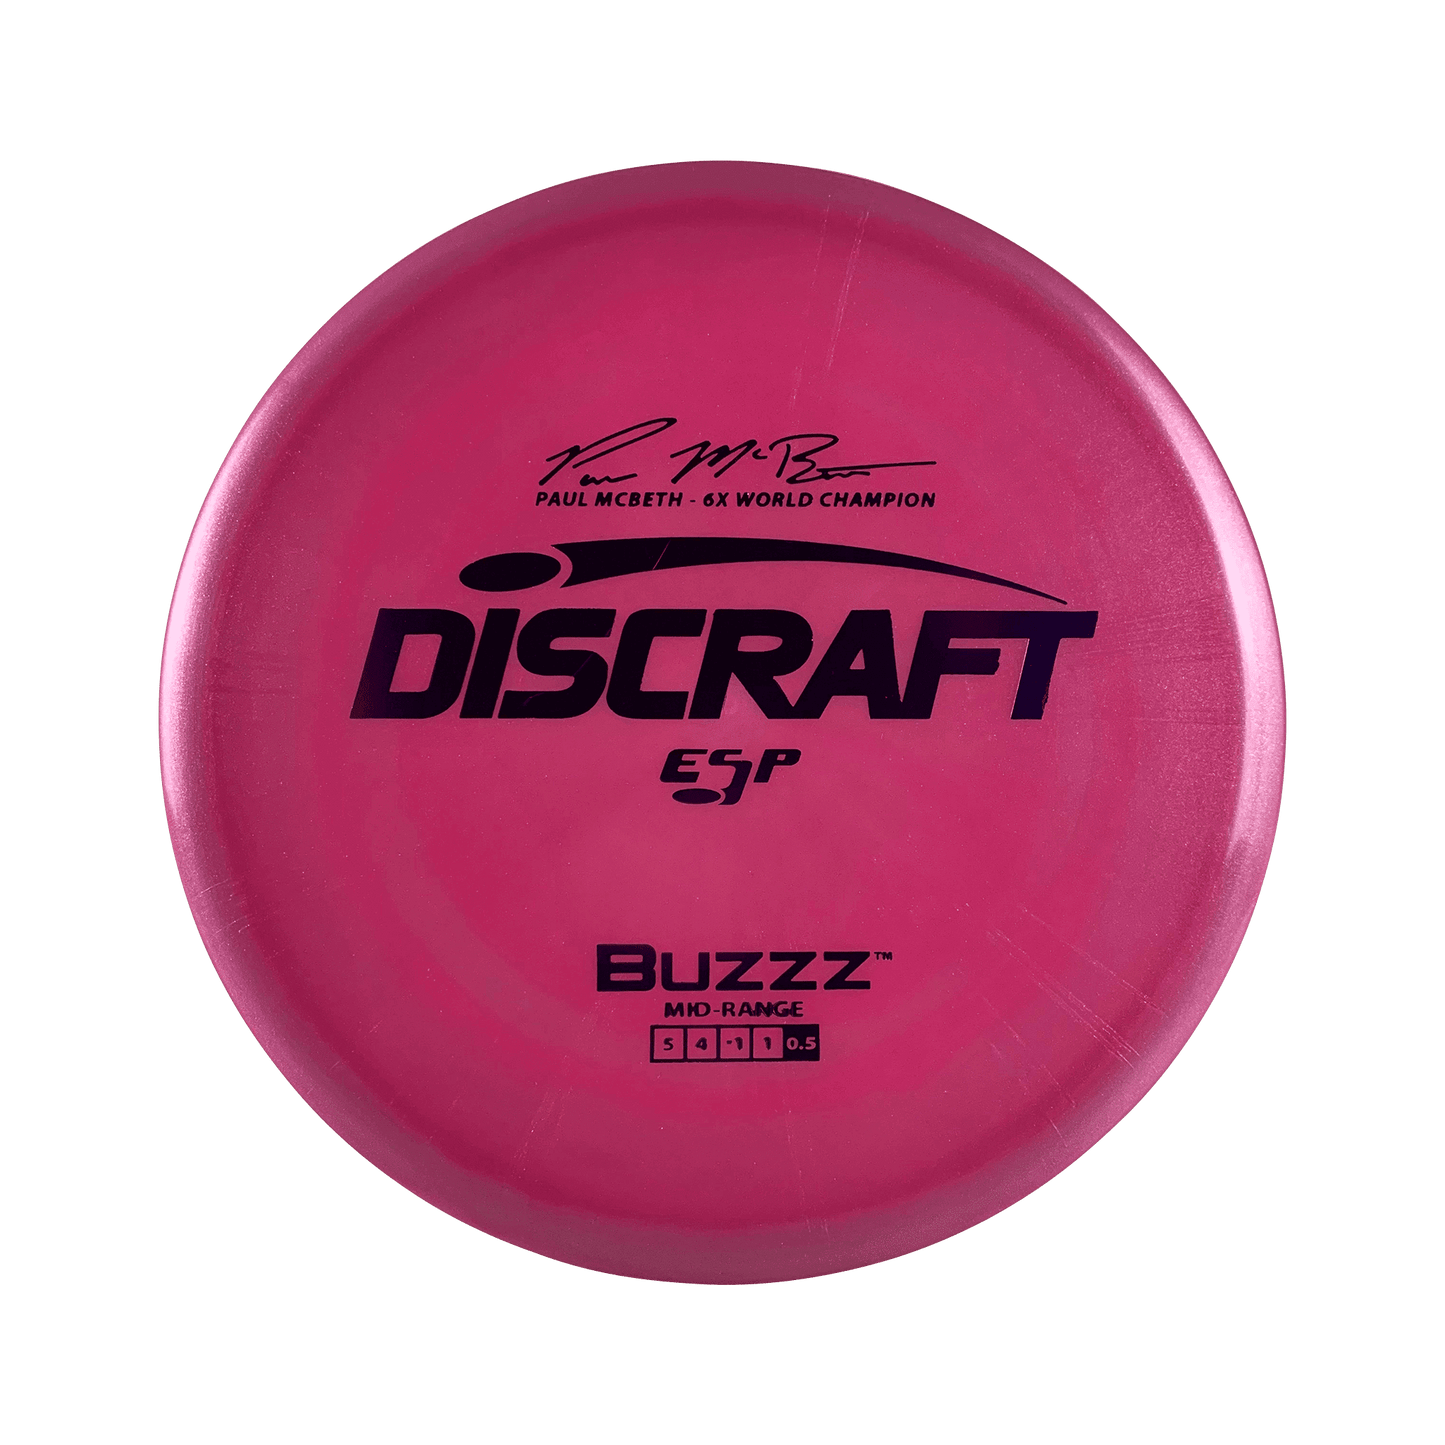 ESP Buzzz - Paul McBeth 6x Disc Discraft multi / maroon 177 